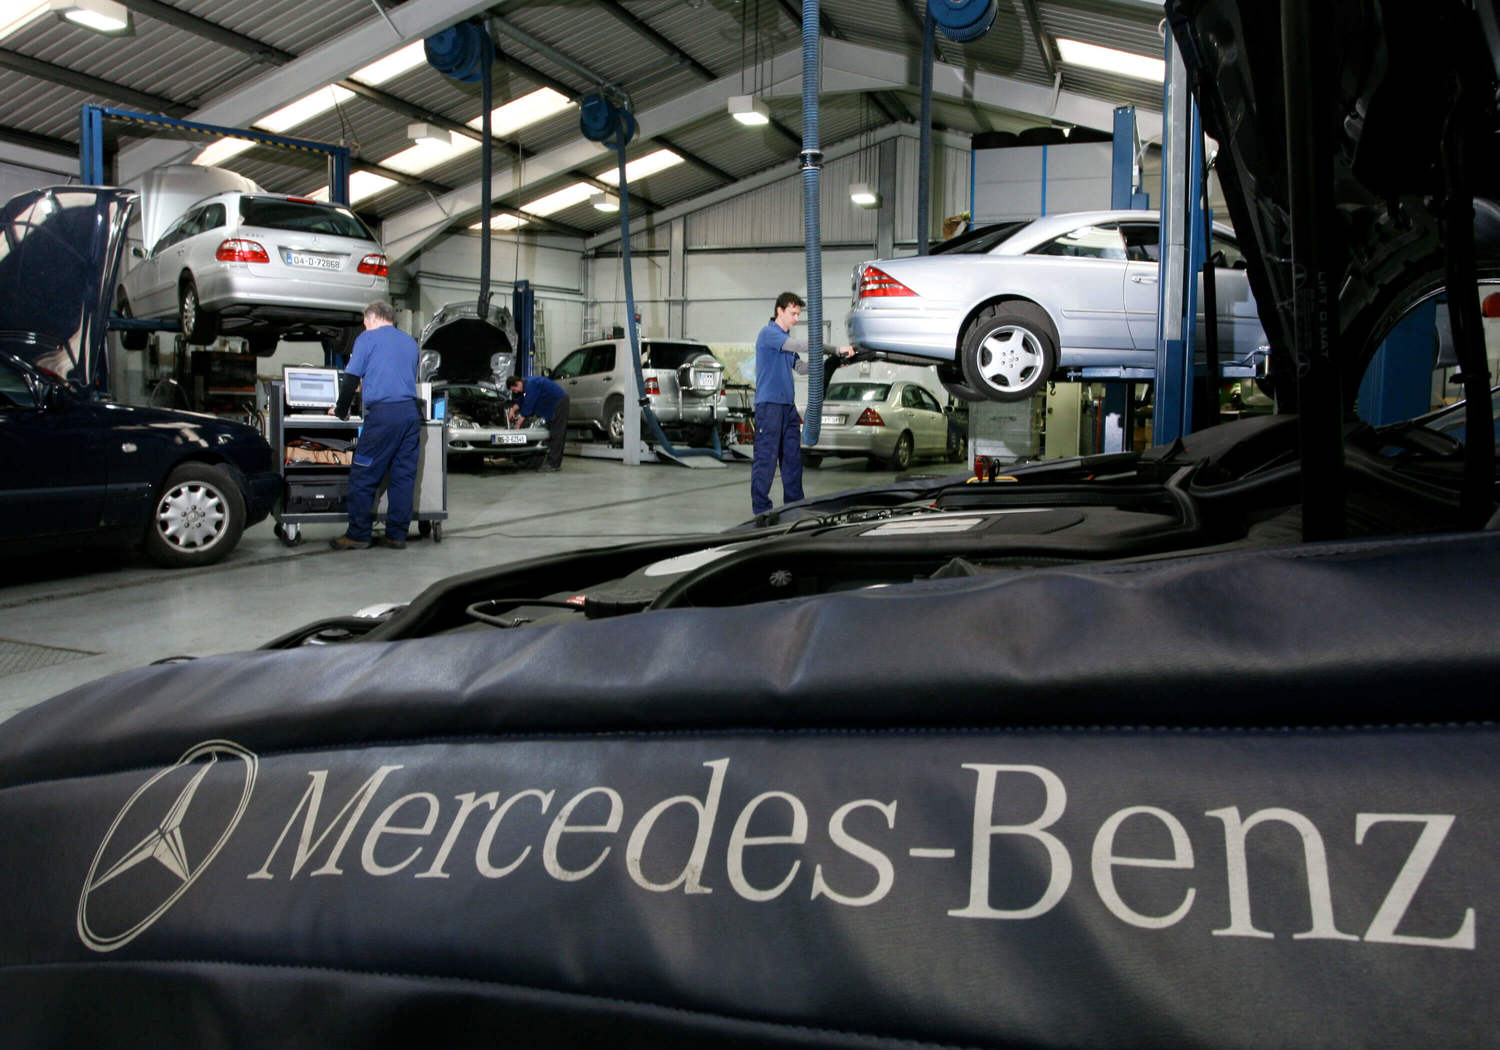 Mercedes-Benz service center